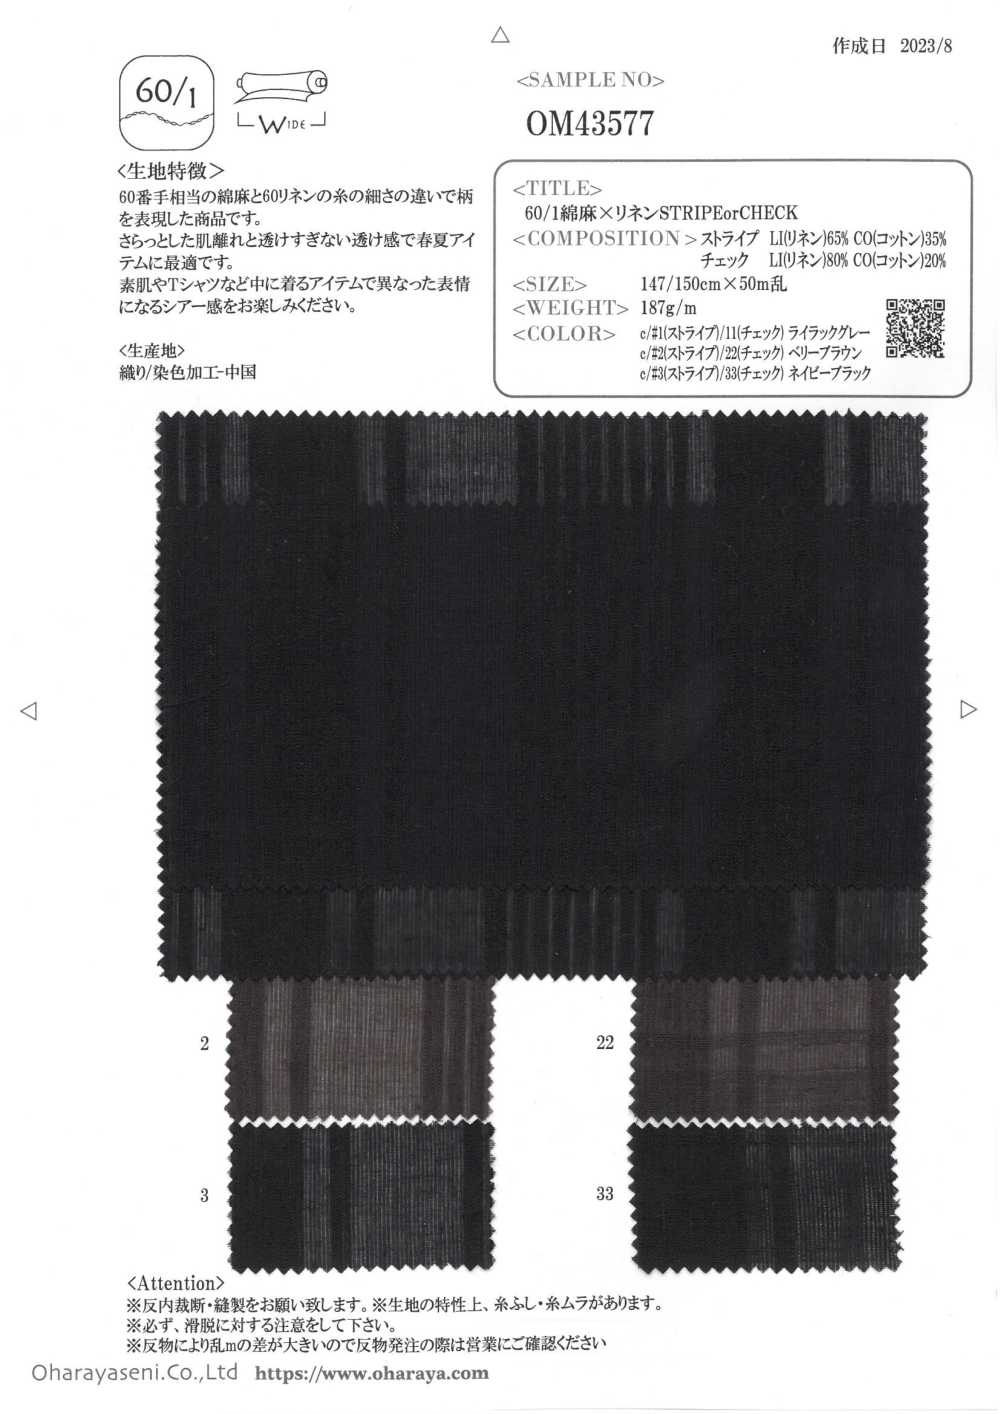 OM43577 60/1 Lin X Lin RAYURE Ou CARREAUX[Fabrication De Textile] Oharayaseni